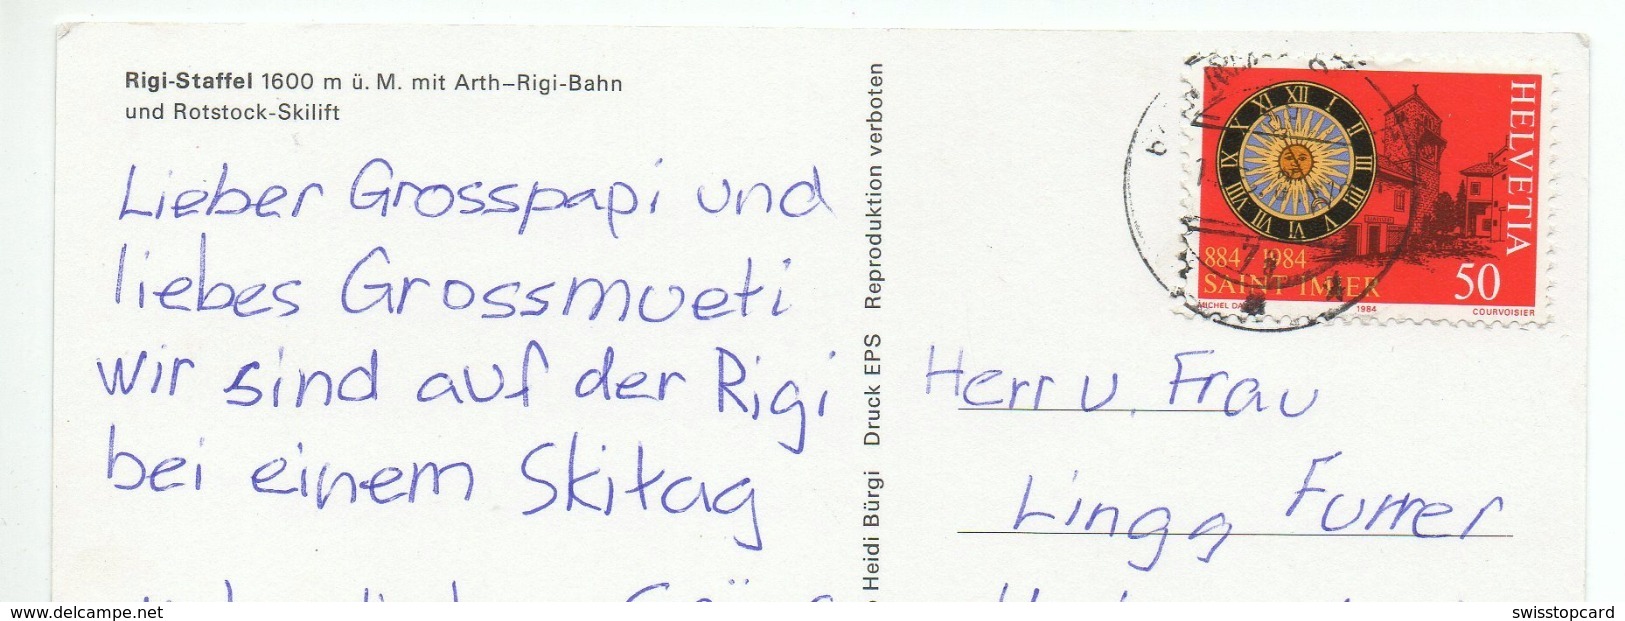 RIGI-Staffel Mit Arth-Rigi-Bahn Und Rotstock-Skilift - Arth